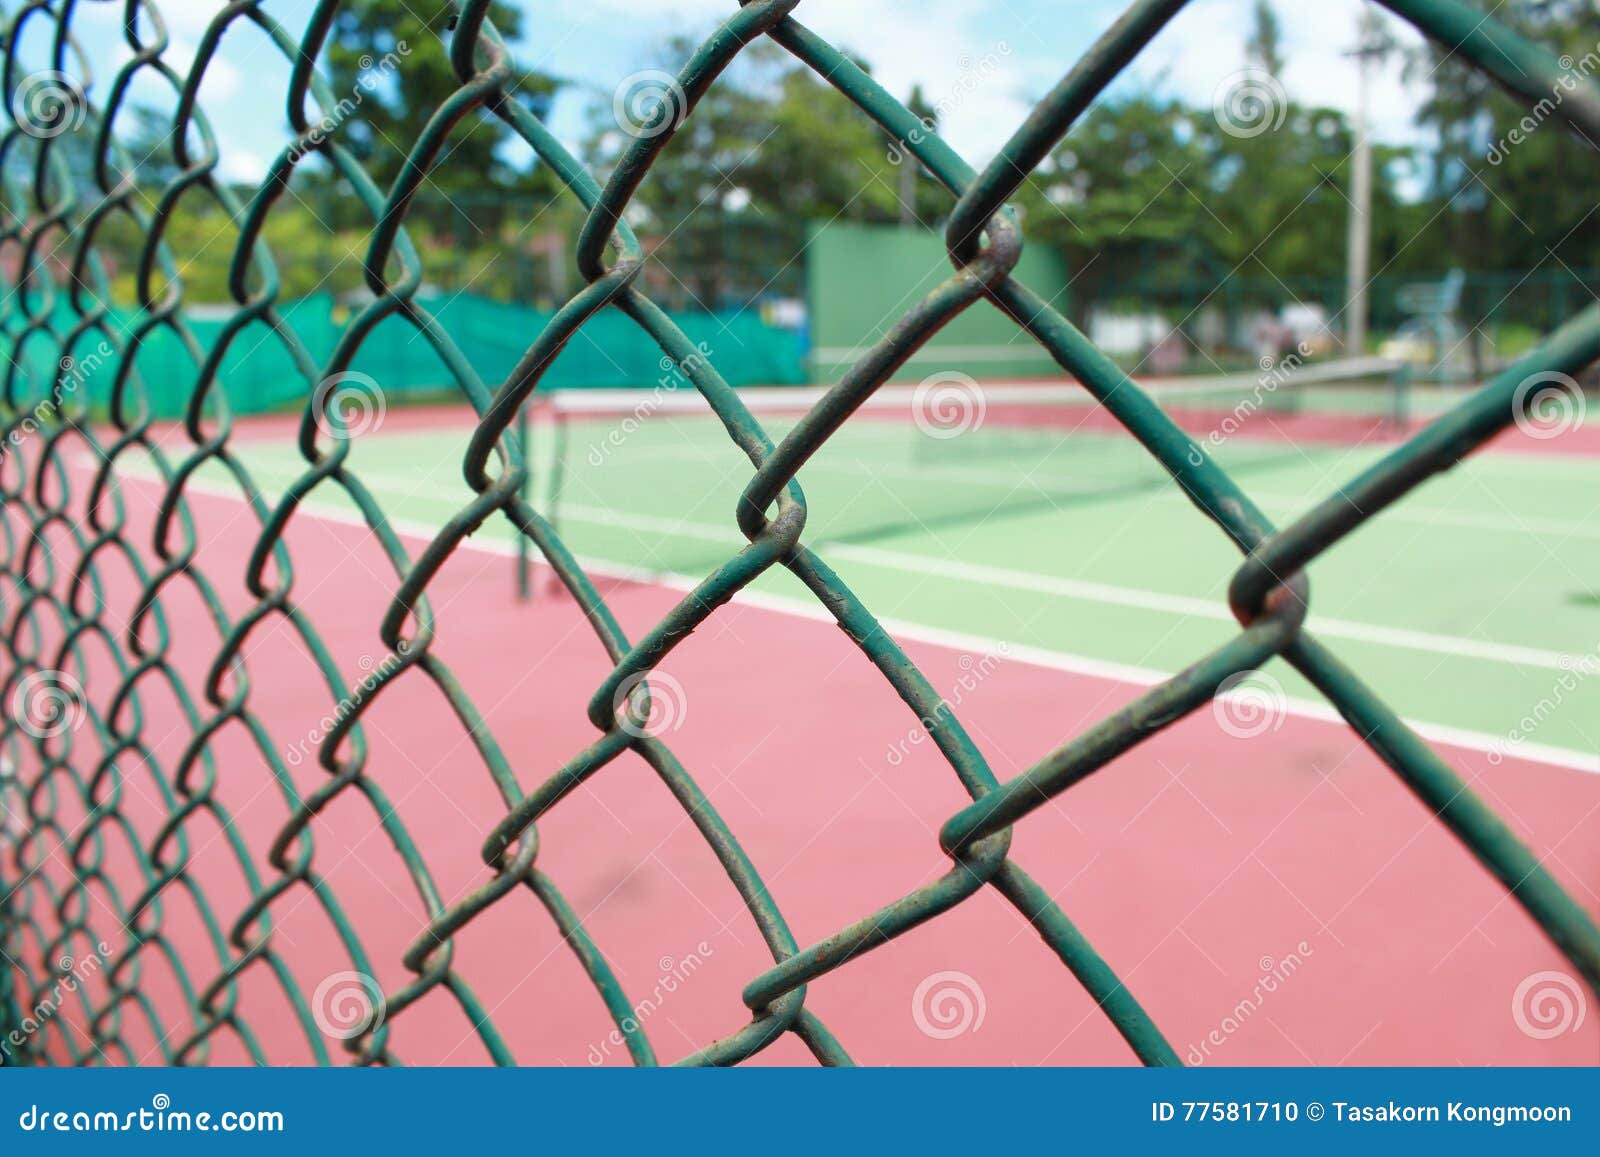 tennis cage